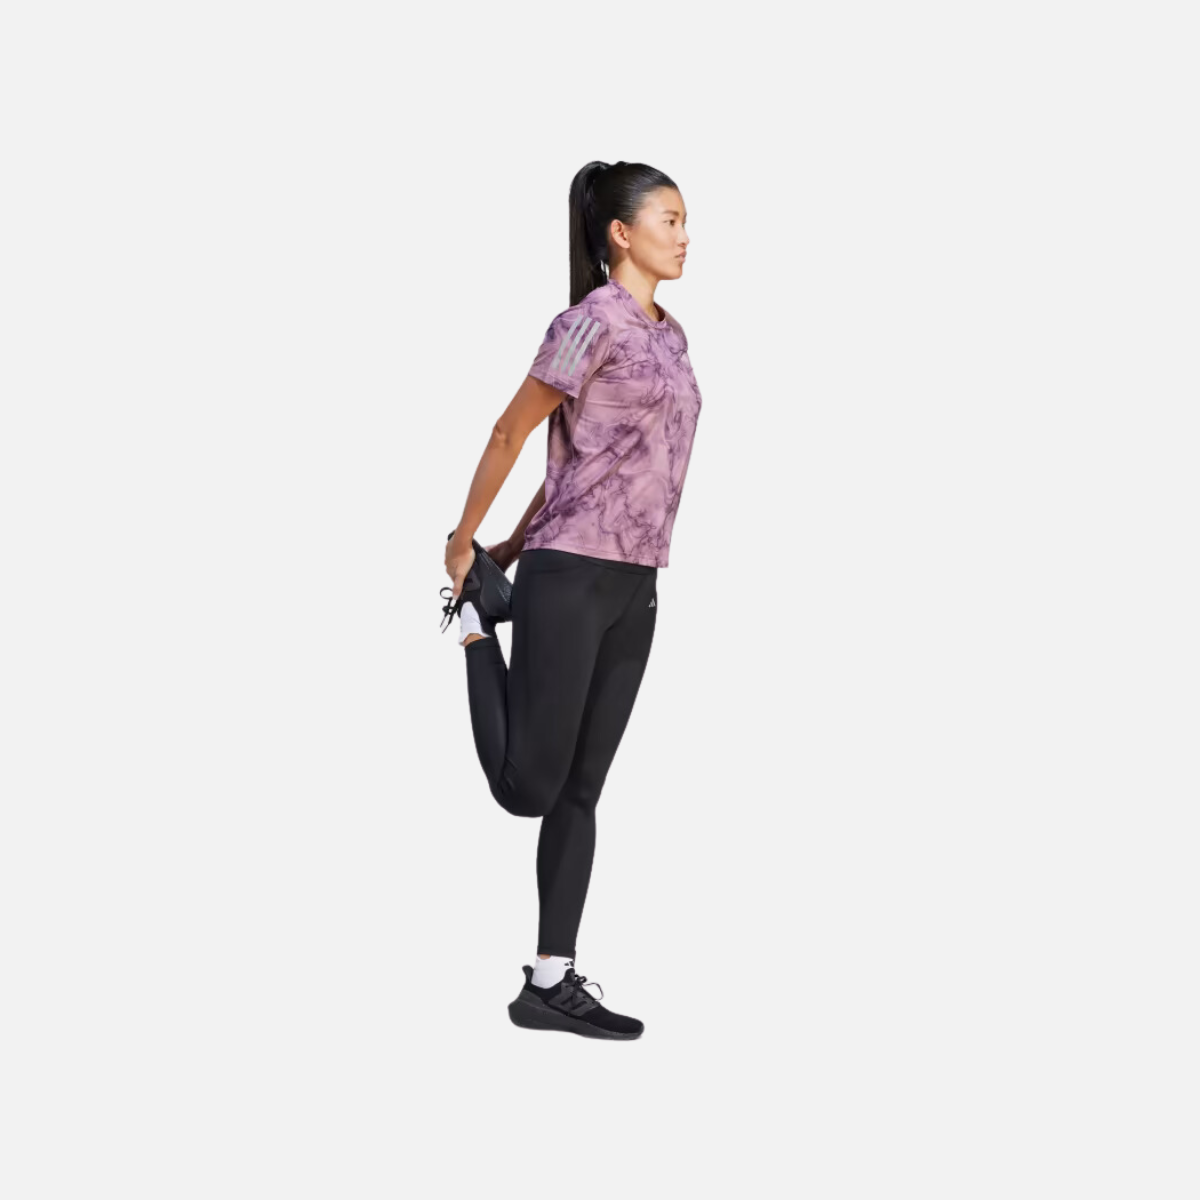 Adidas Own The Run Allover Print Women's Running T-shirt -Wonder Orchid/Black